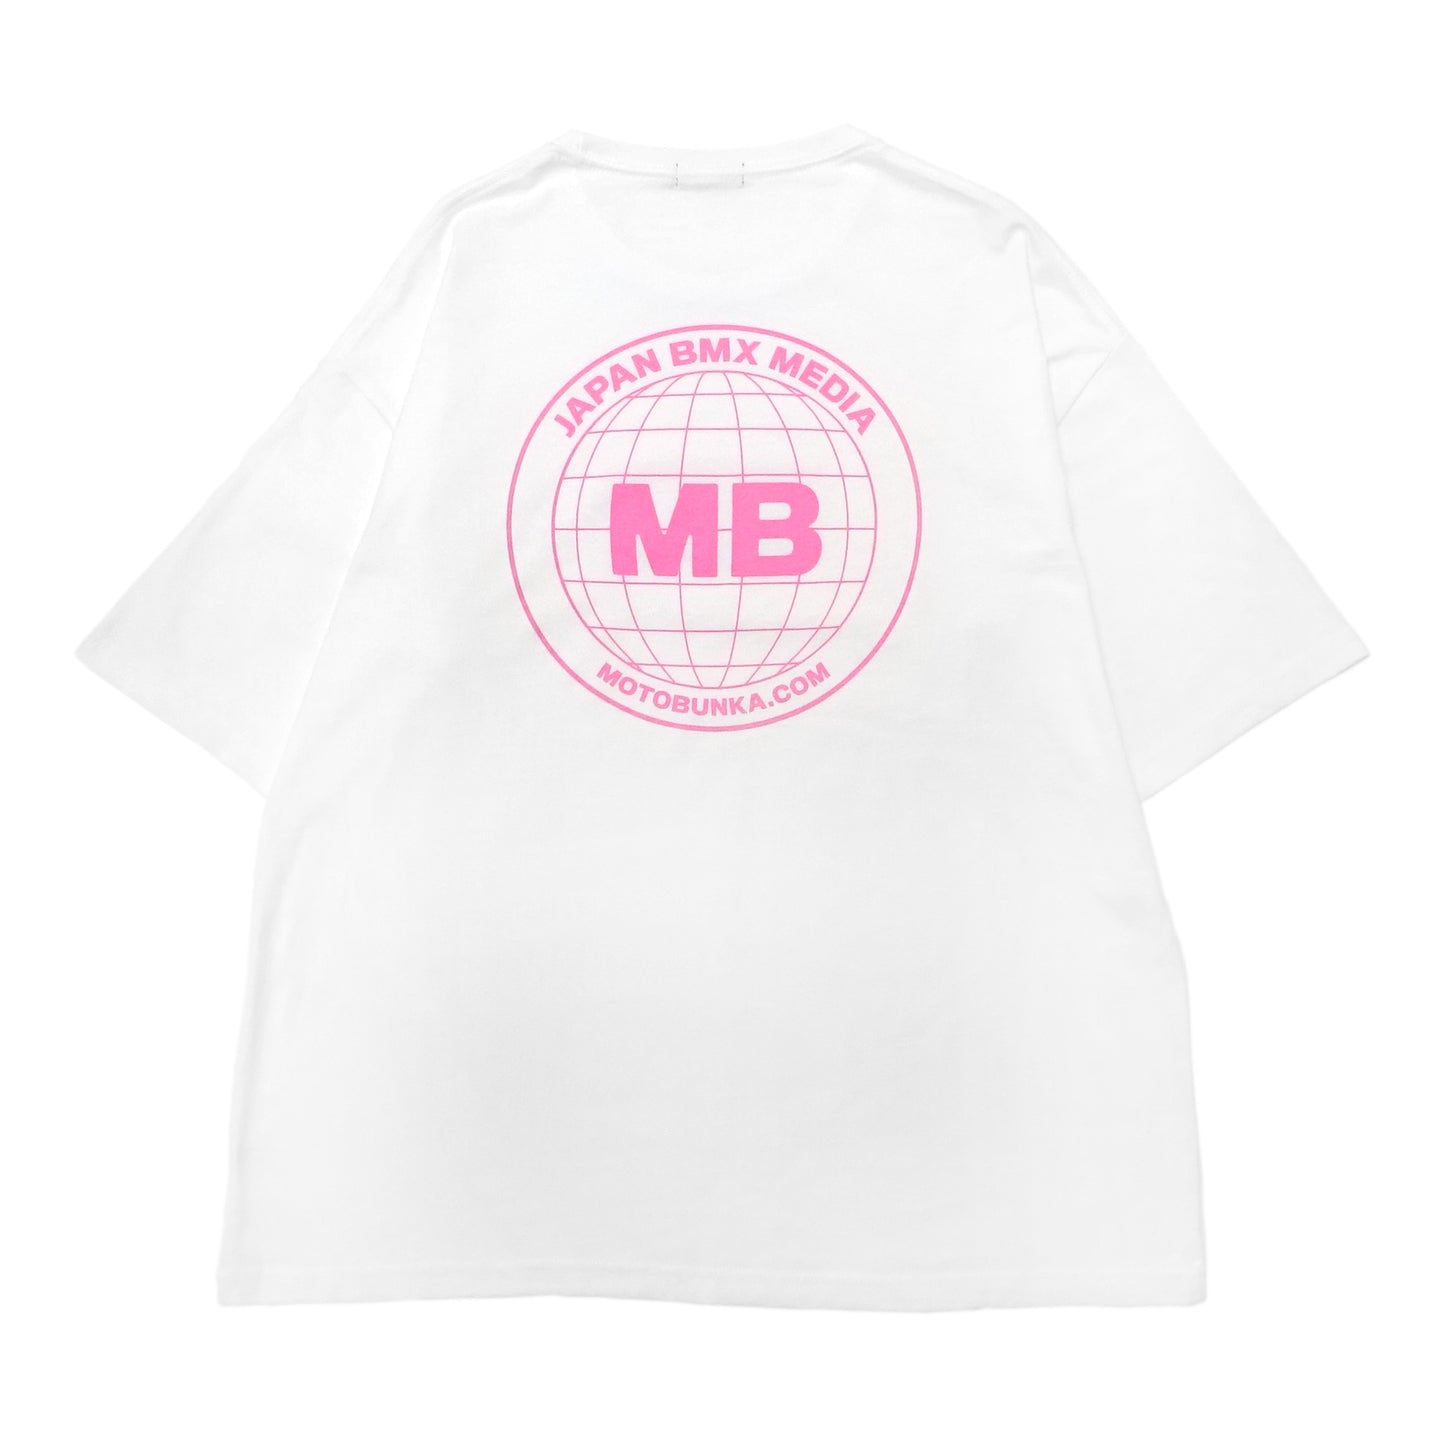 MOTO-BUNKA - JBM 22 T-Shirt/White-Pink